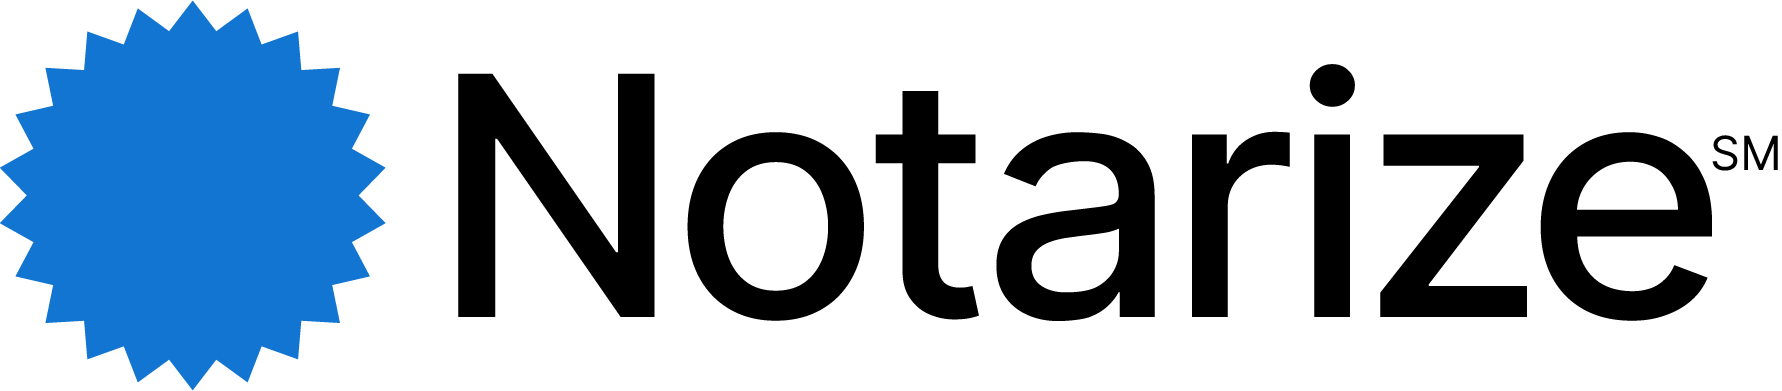 Notarize-logo-blue-black-sm-1